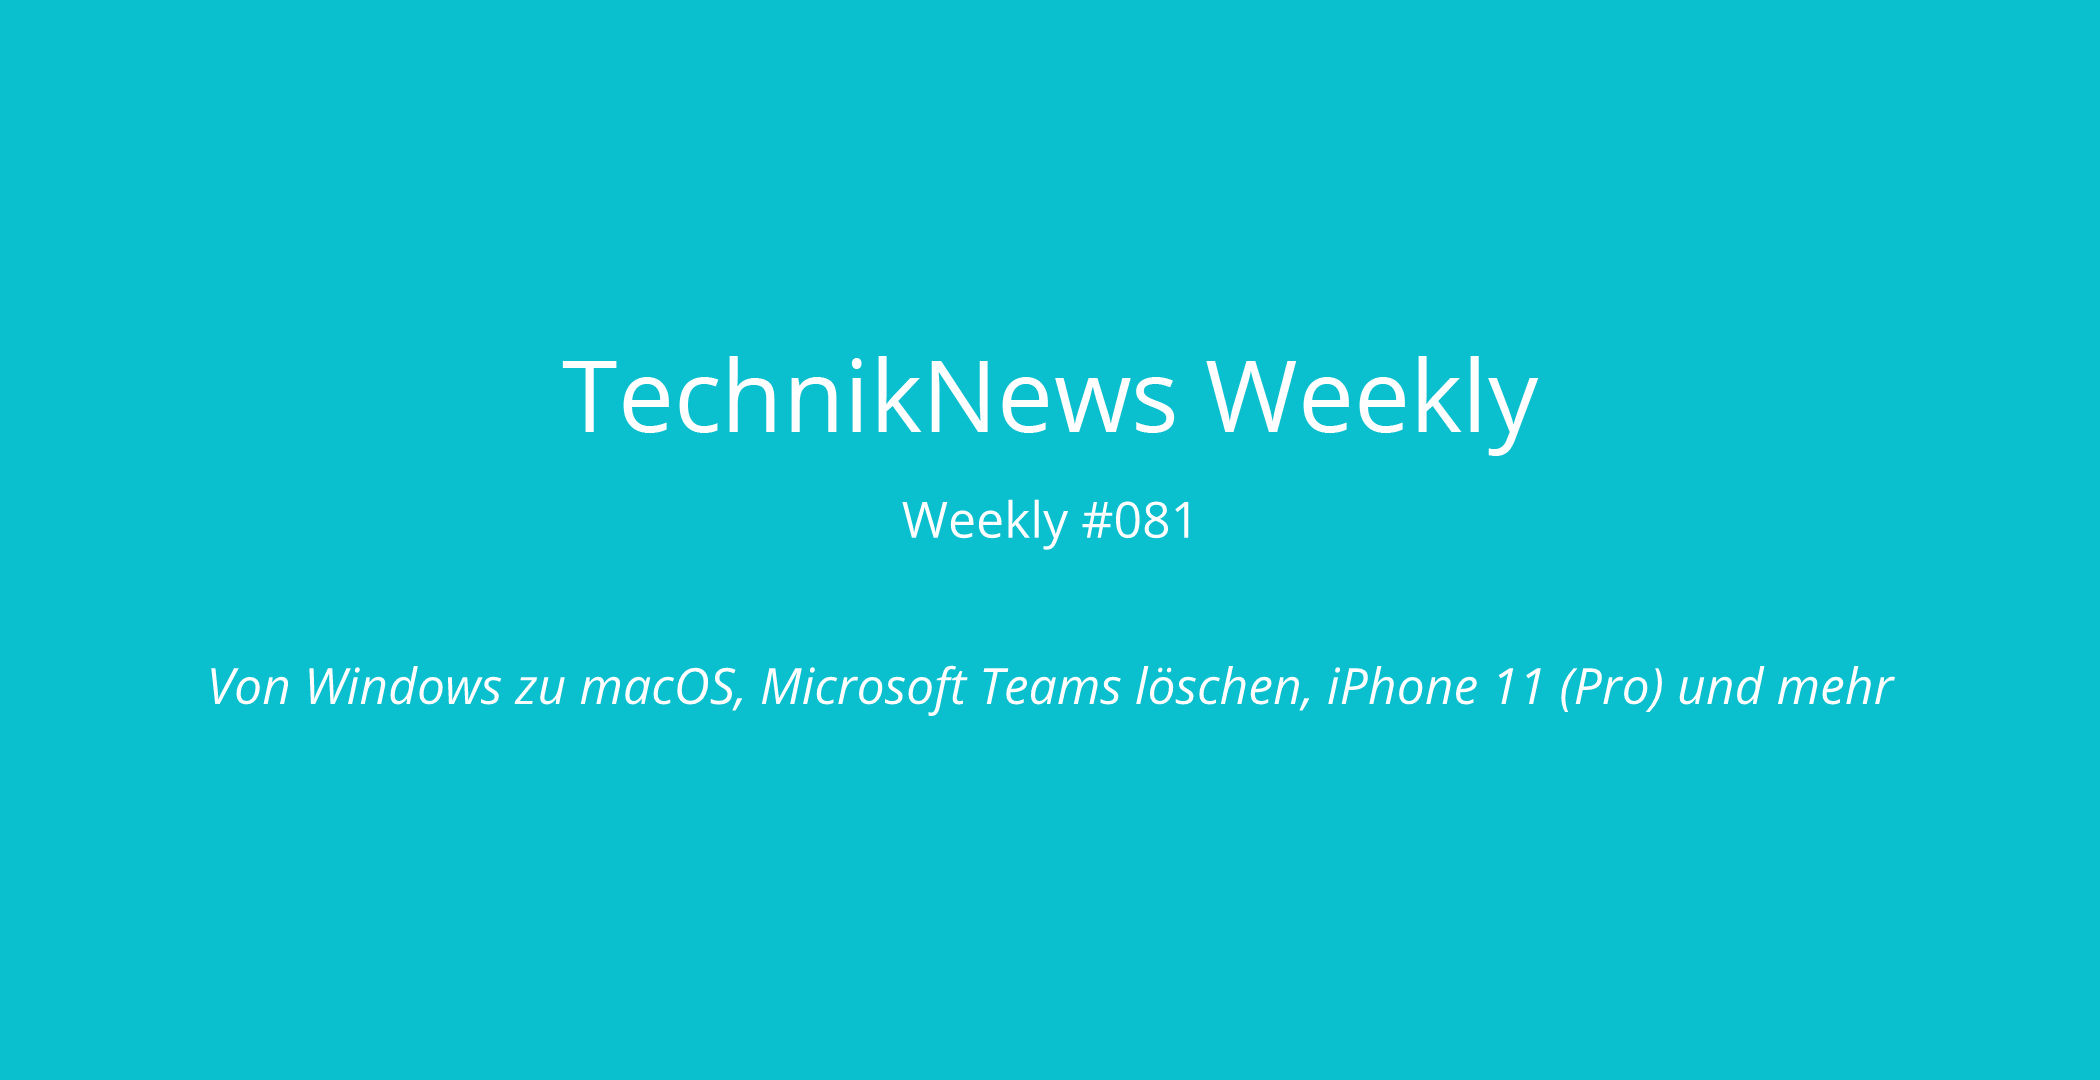 TechnikNews Weekly #081